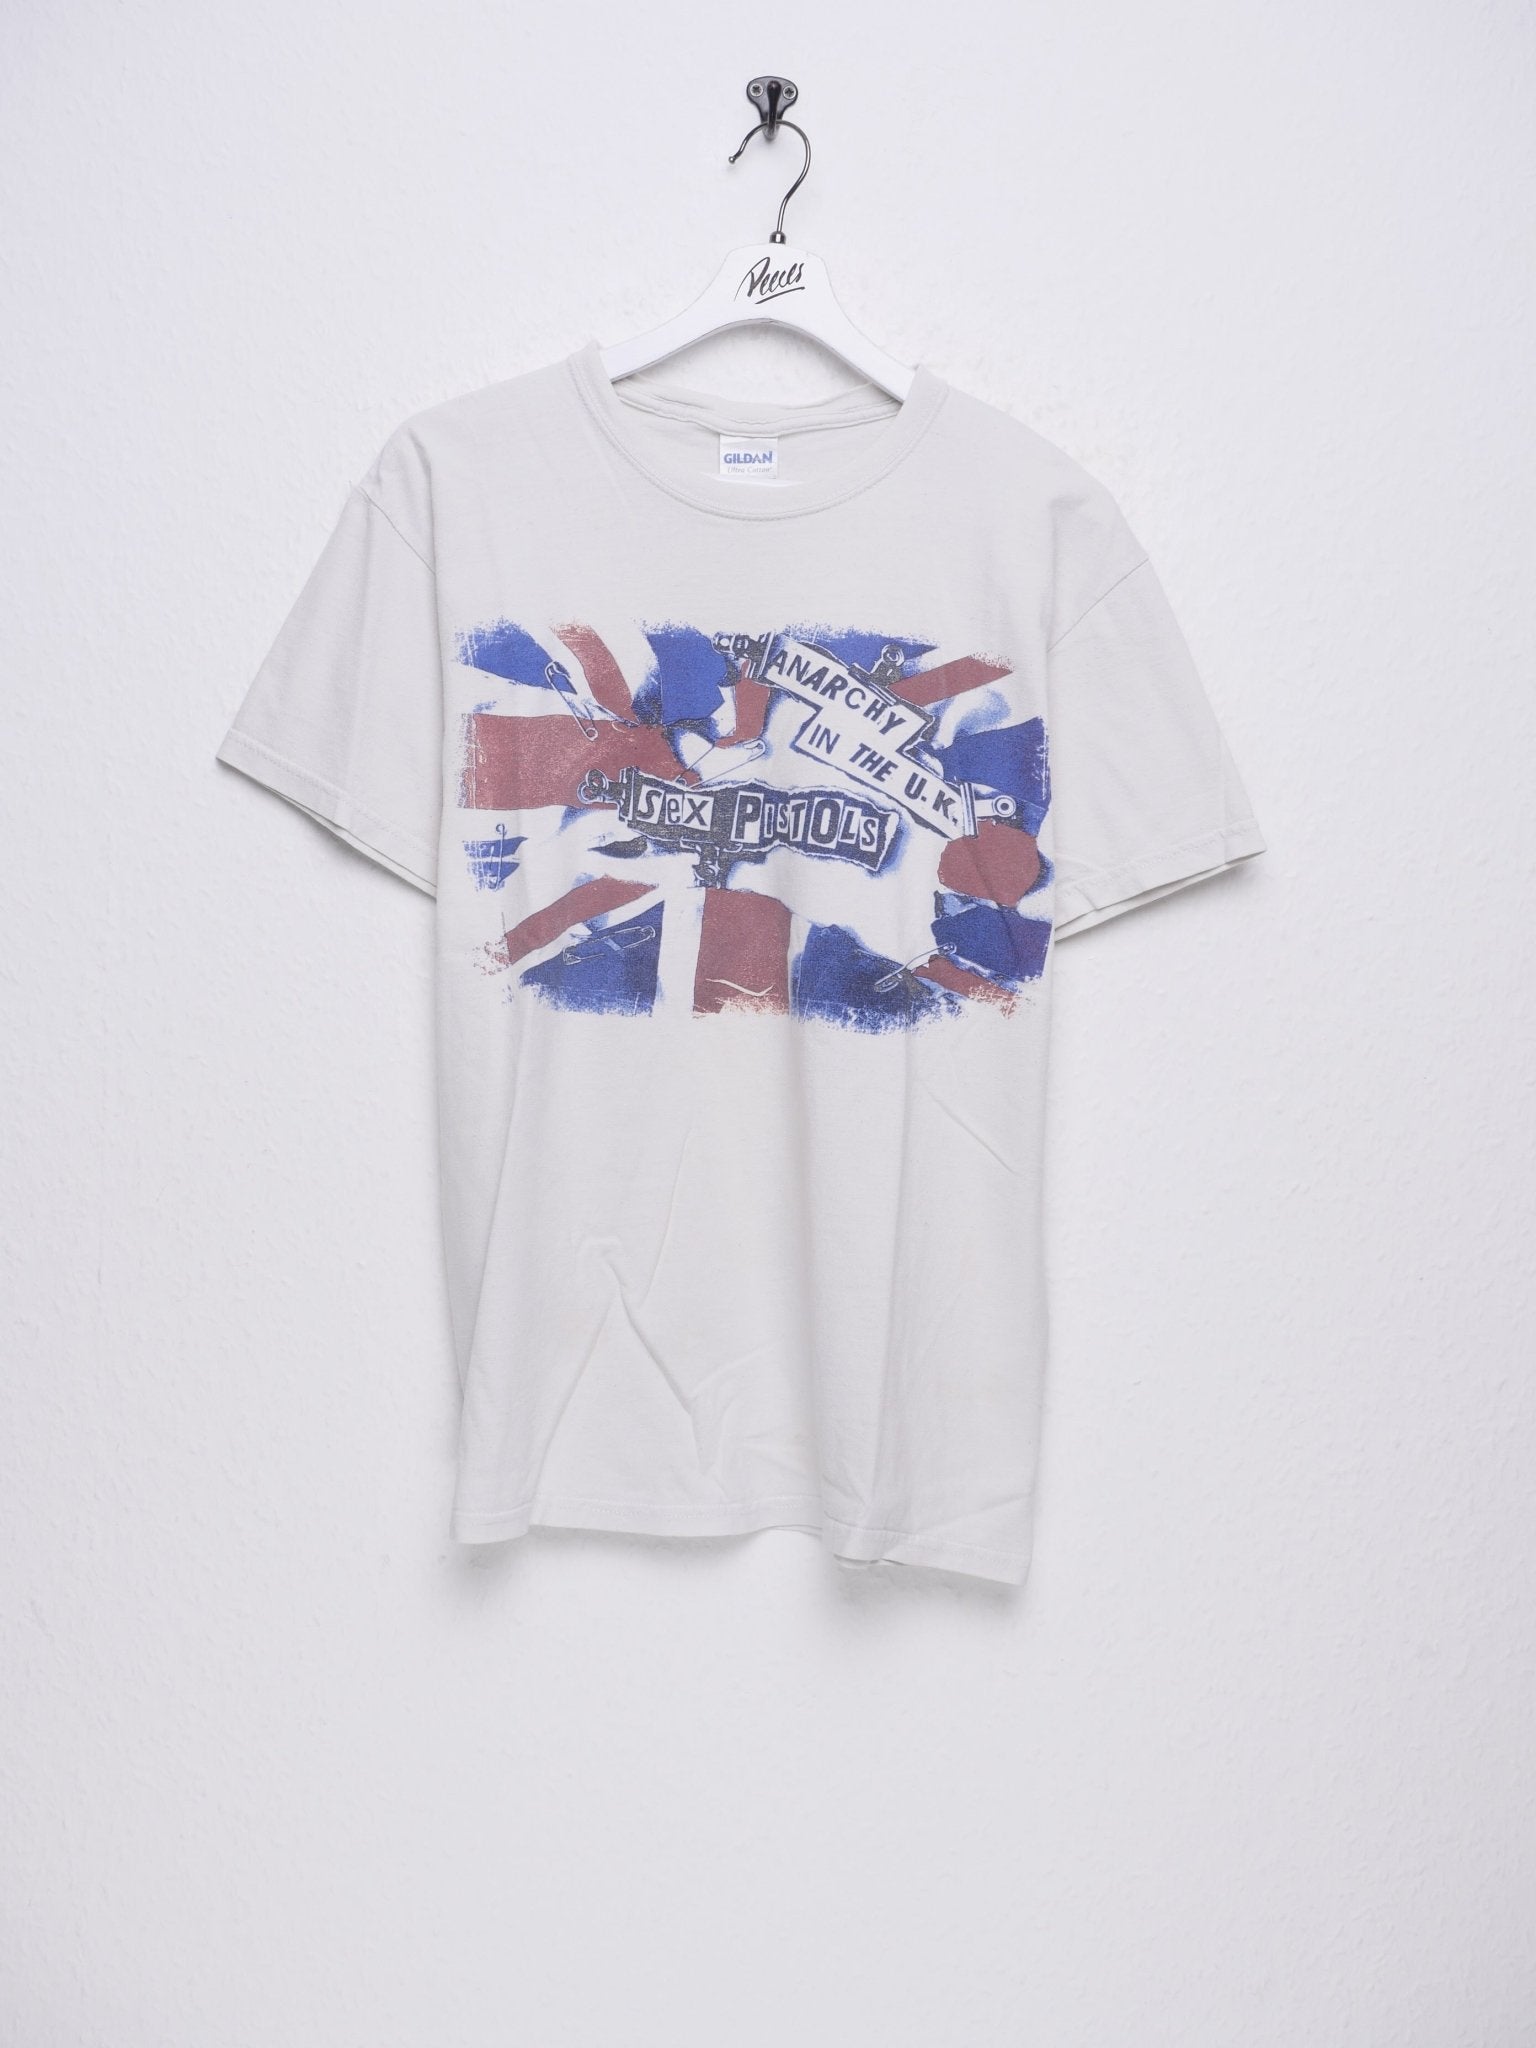 Sex Pistols printed Logo Shirt - Peeces